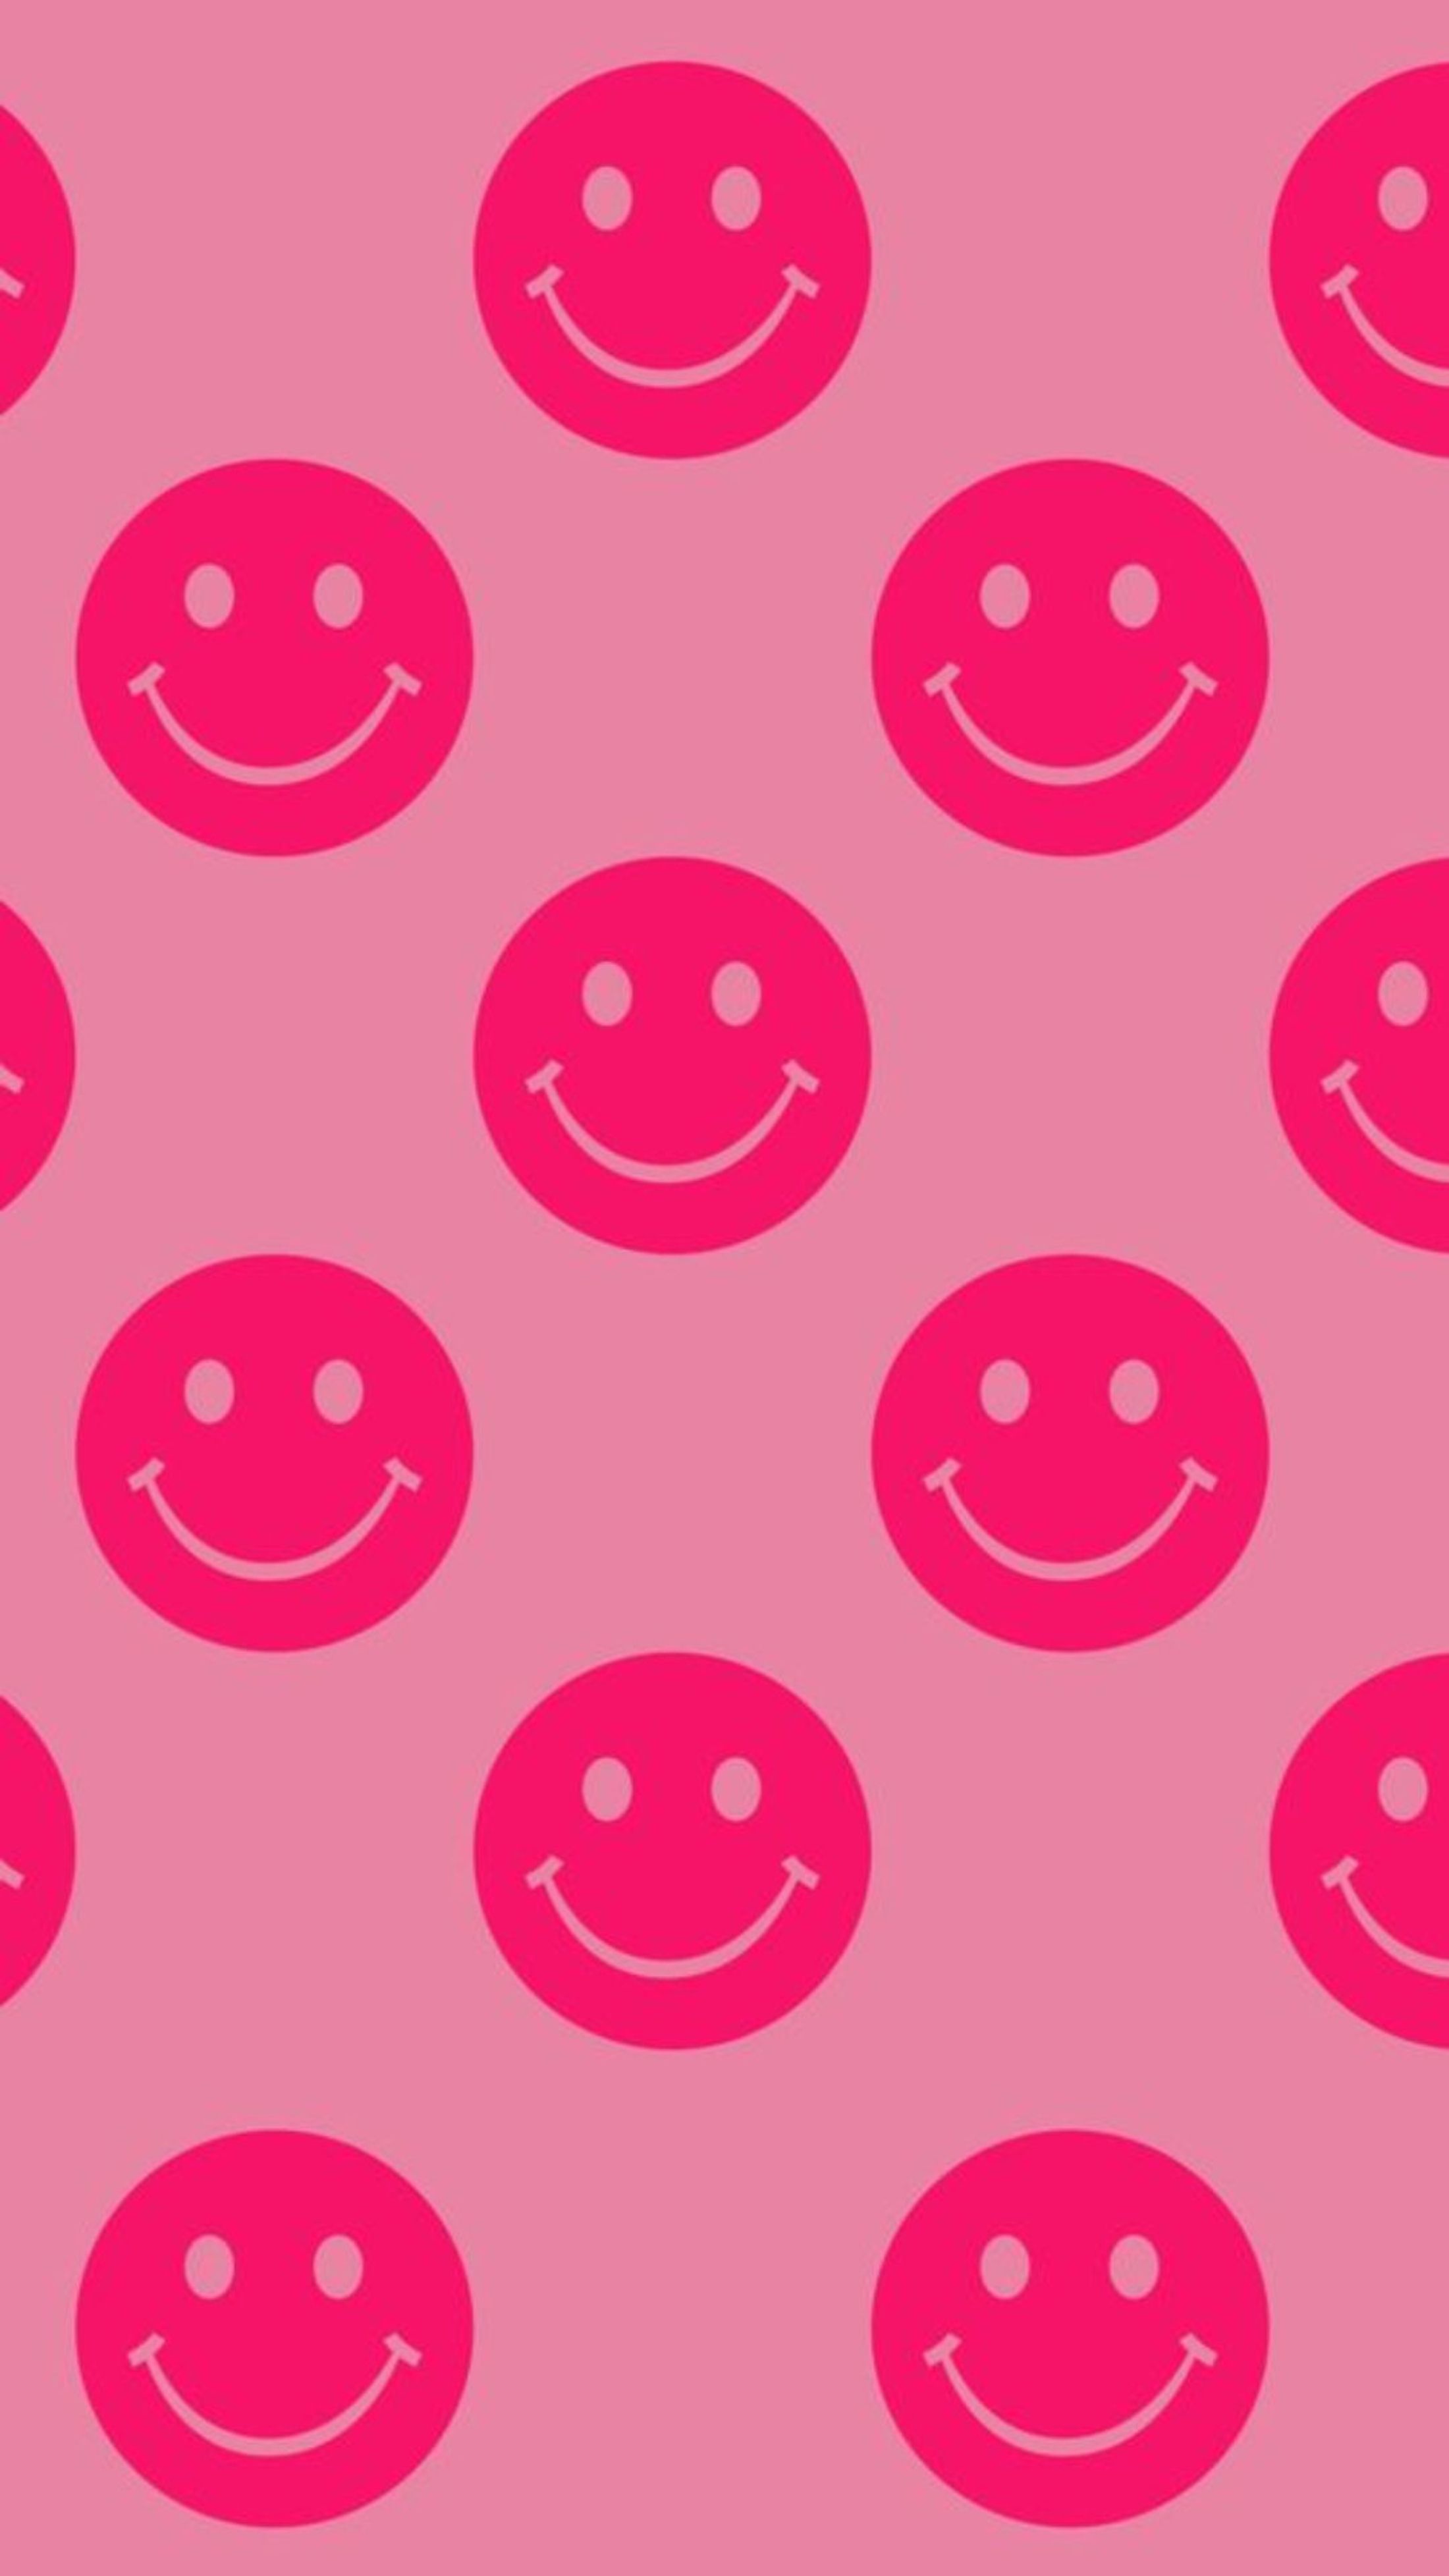 Download Preppy Pink Smiley Face Wallpaper